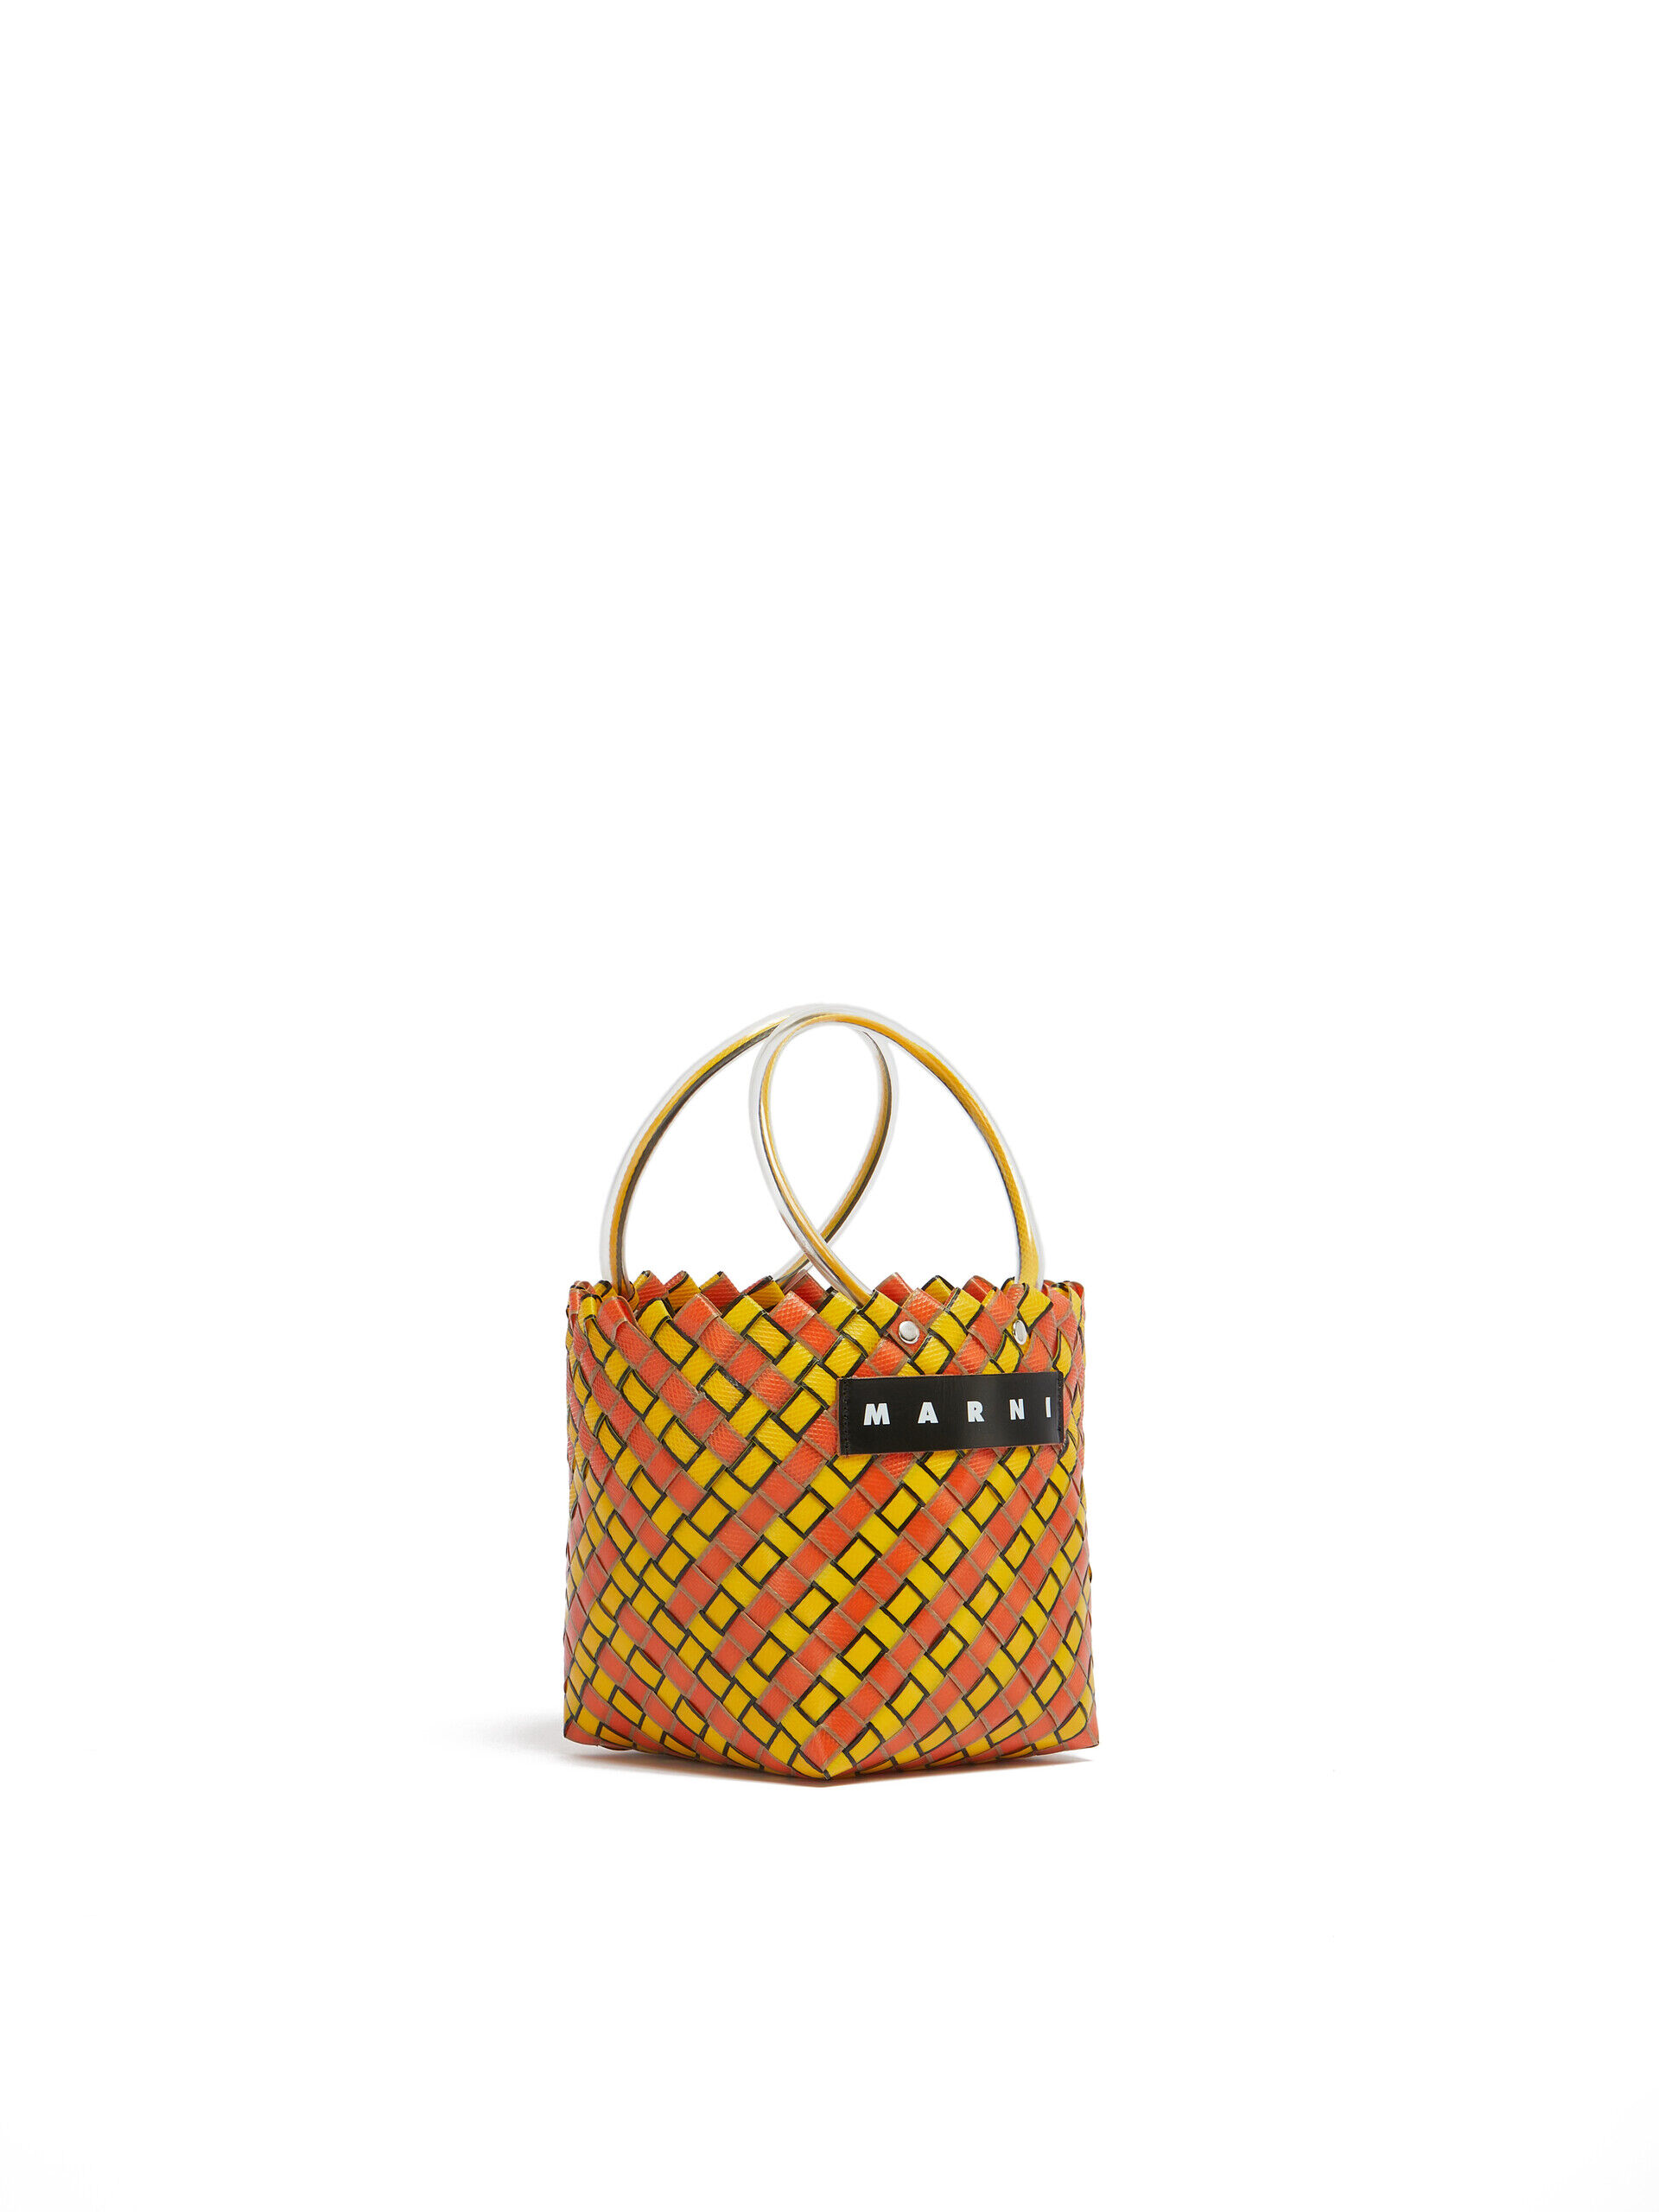 MARNI MARKET TAHA bag in orange and yellow woven material | Marni